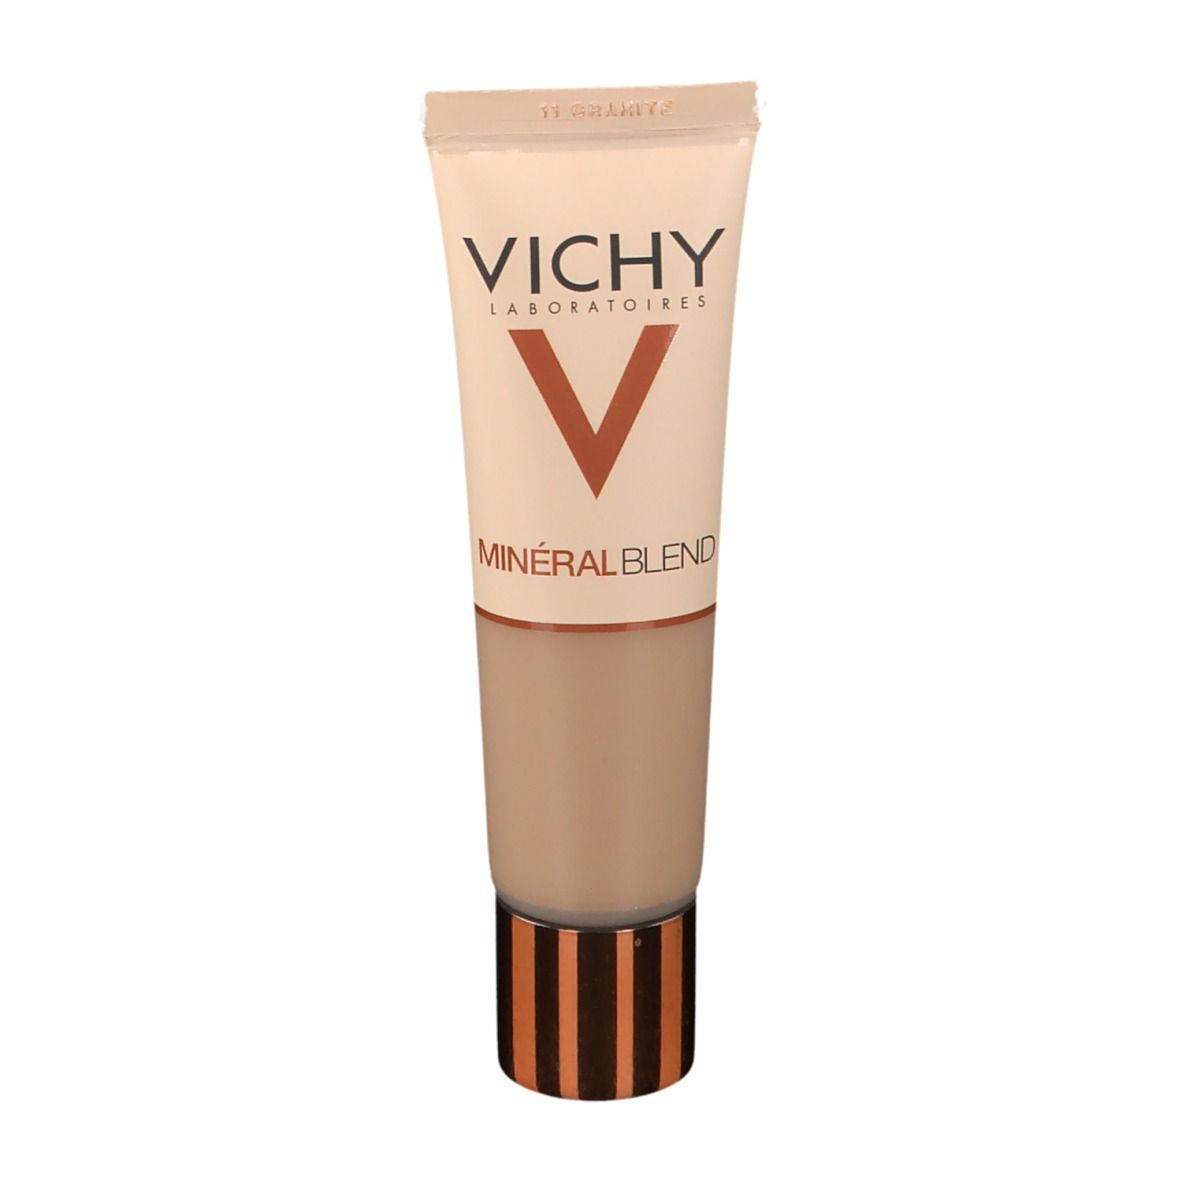 Vichy Minéralblend Make-up Fluid 11 granite